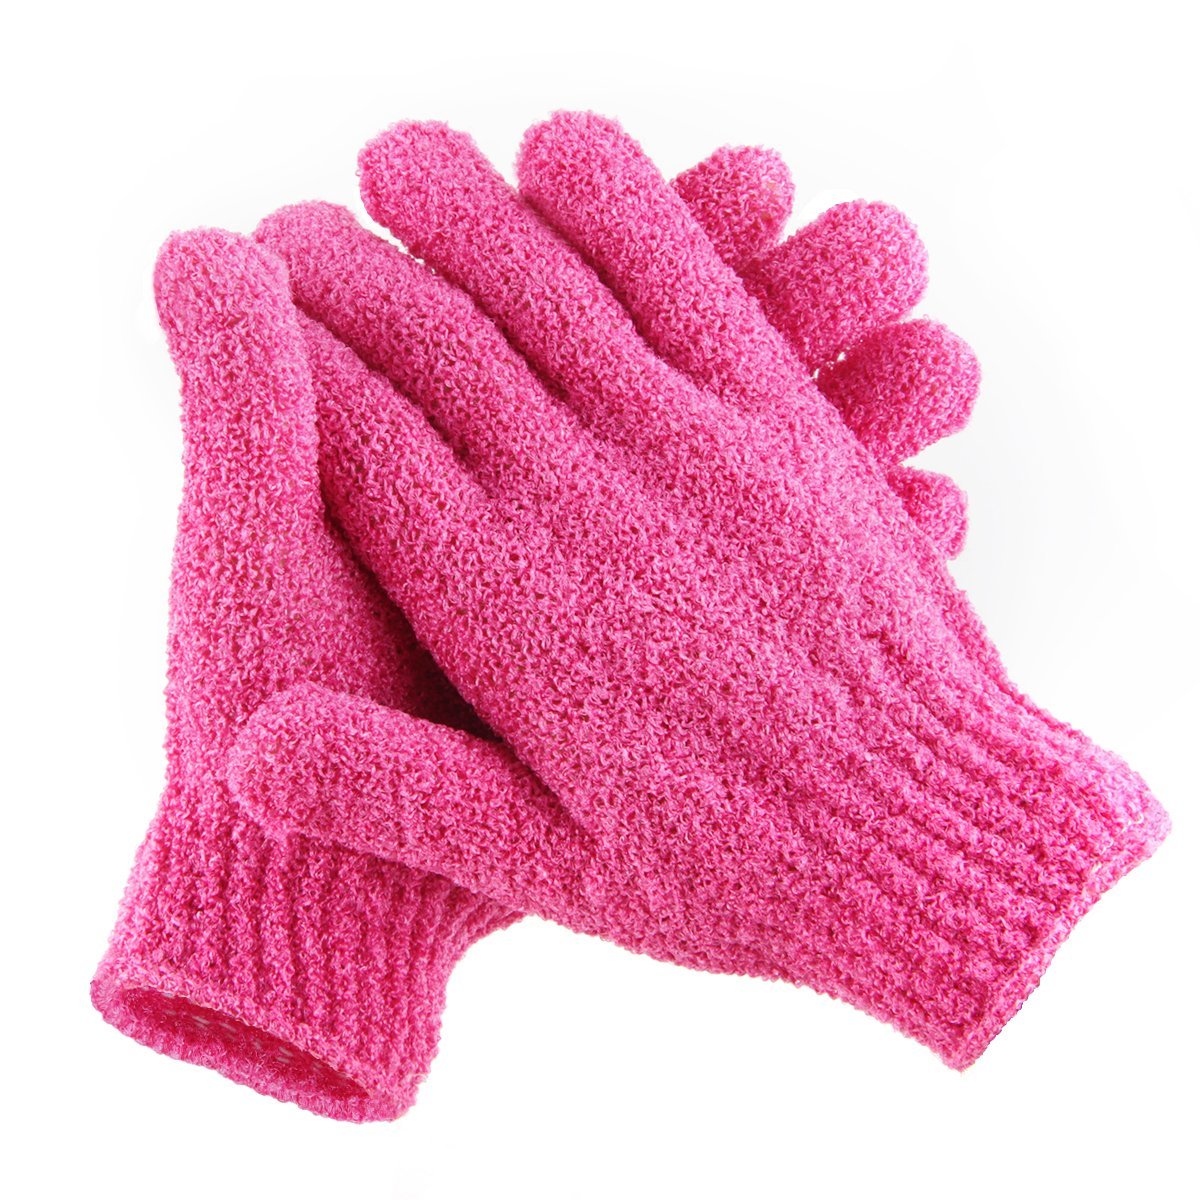 4 Pair Set Scrubbing Exfoliating Gloves, Double Side Durable Nylon Shower Gloves, Body Scrub Exfoliator for Men, Women & Kids, Bath Scrubber for Acne & Dead Cell - image 4 of 6